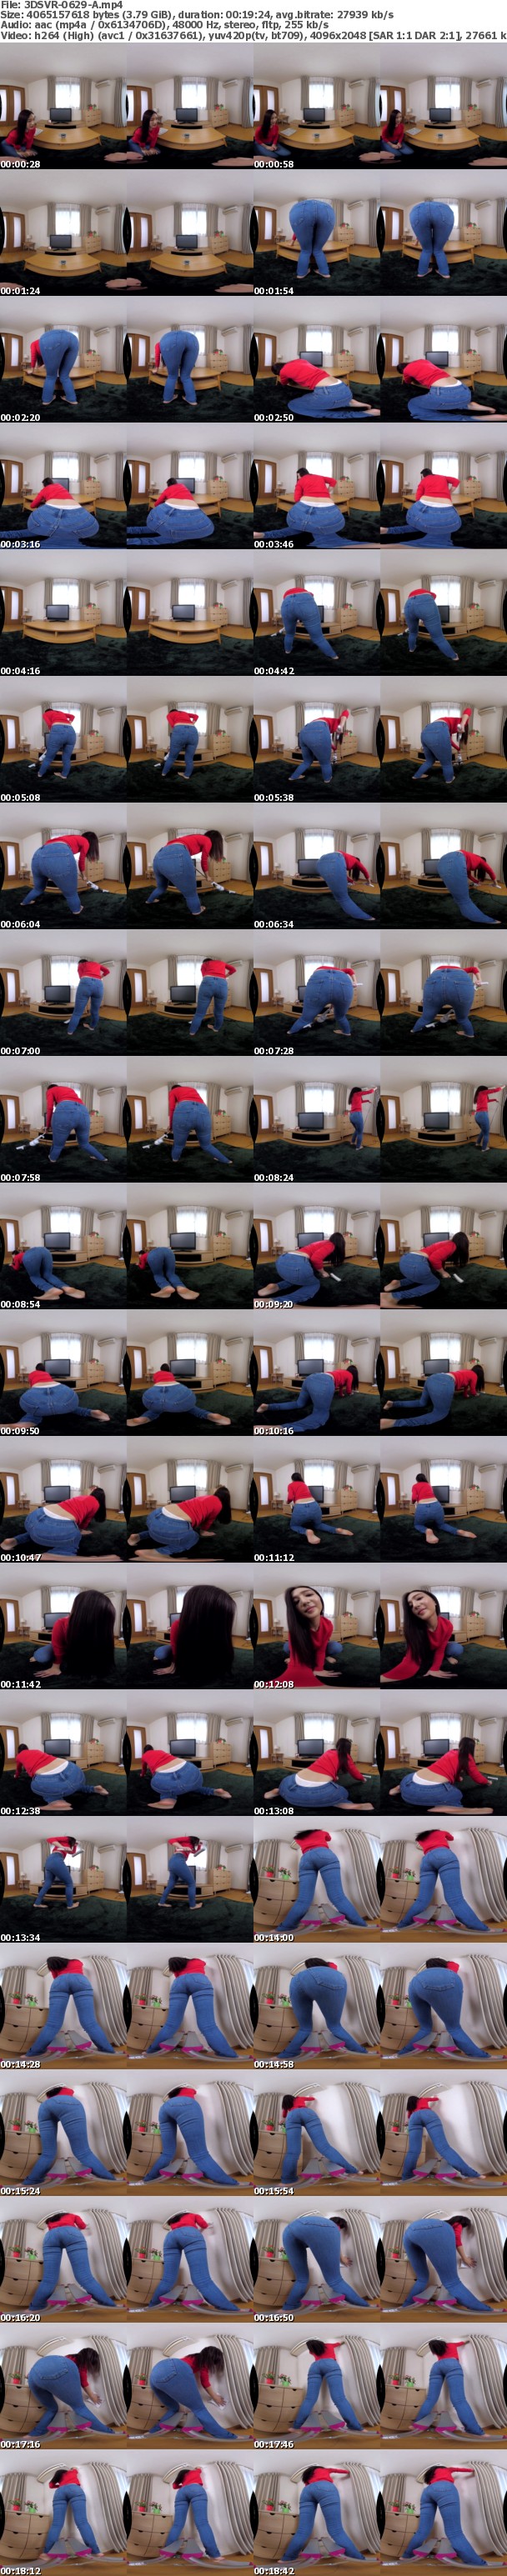 (VR) 3DSVR-0629 兄嫁のピタピタなデニム尻に我慢できずに後ろからチ●ポをねじ込みガン突き！ 古川いおり